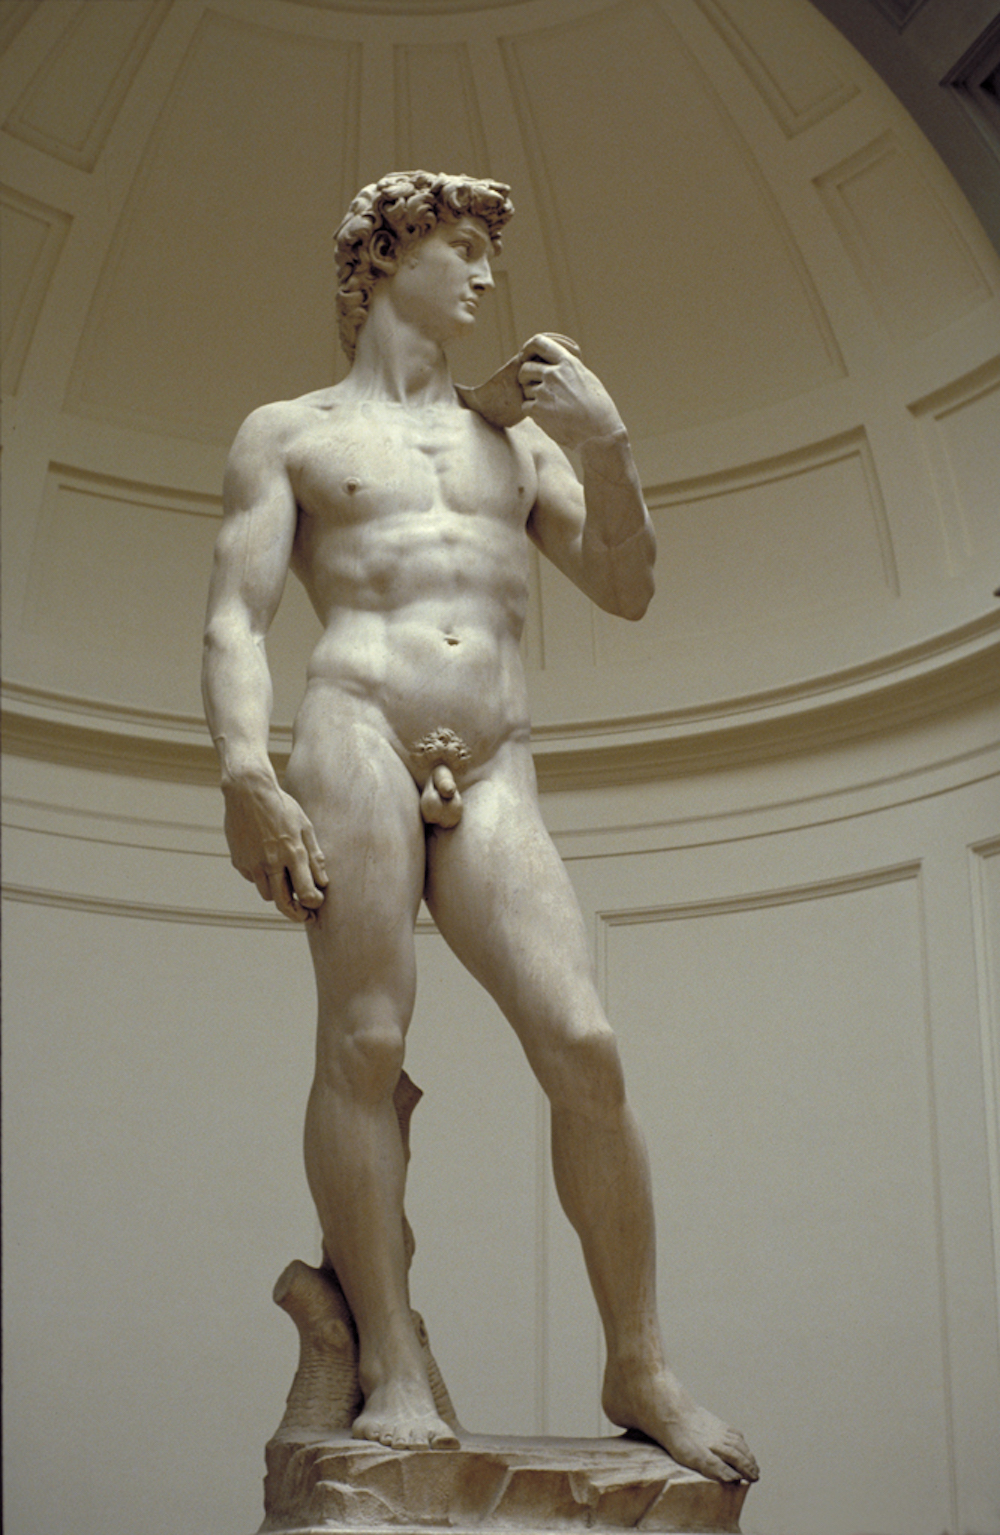 A photo of the statue of David taken by Allan T. Kohl